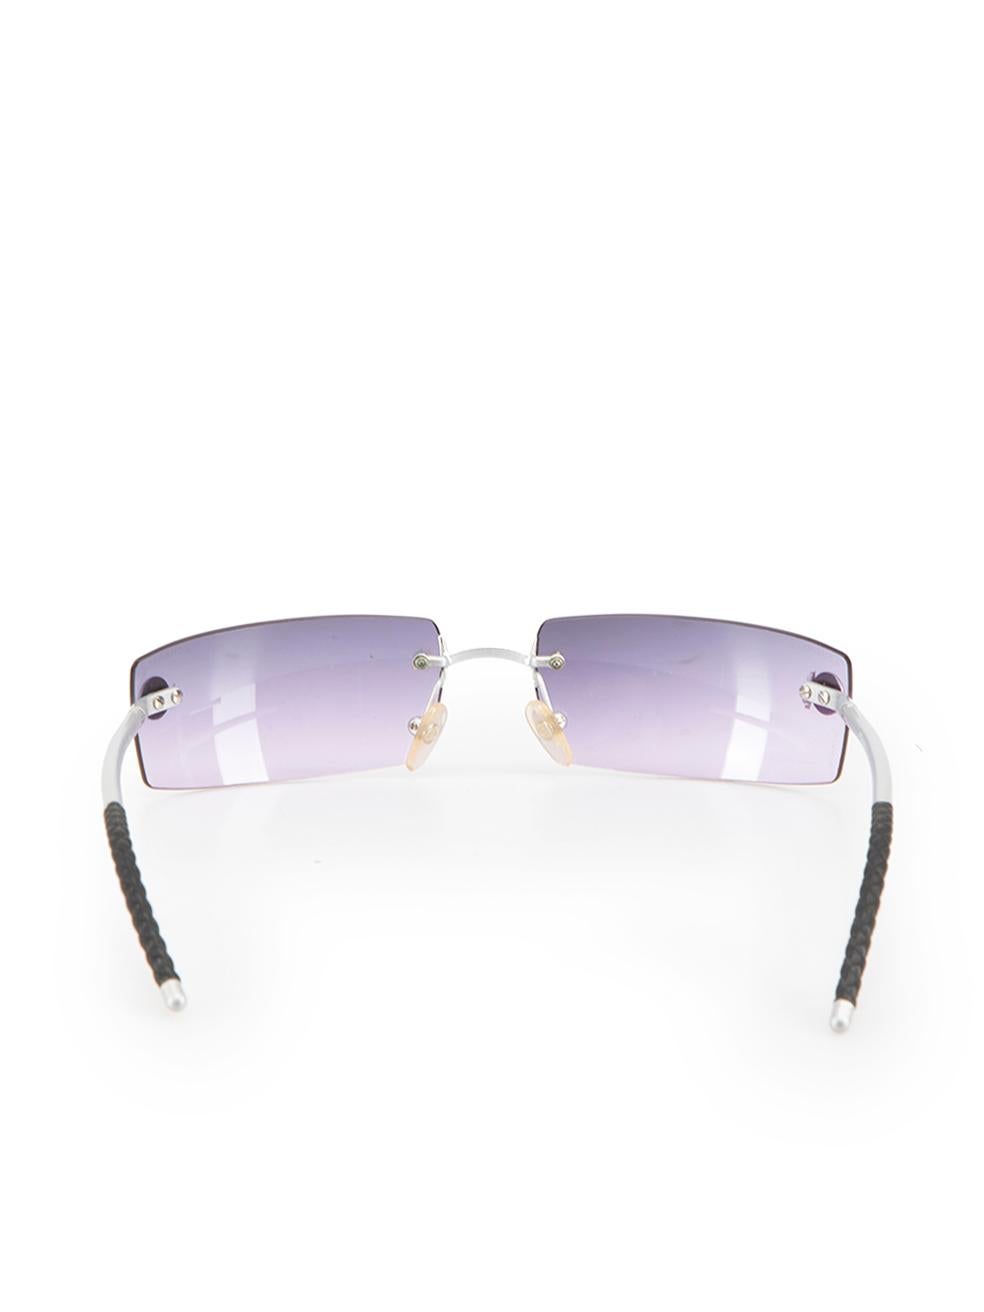 dolce and gabbana sunglasses